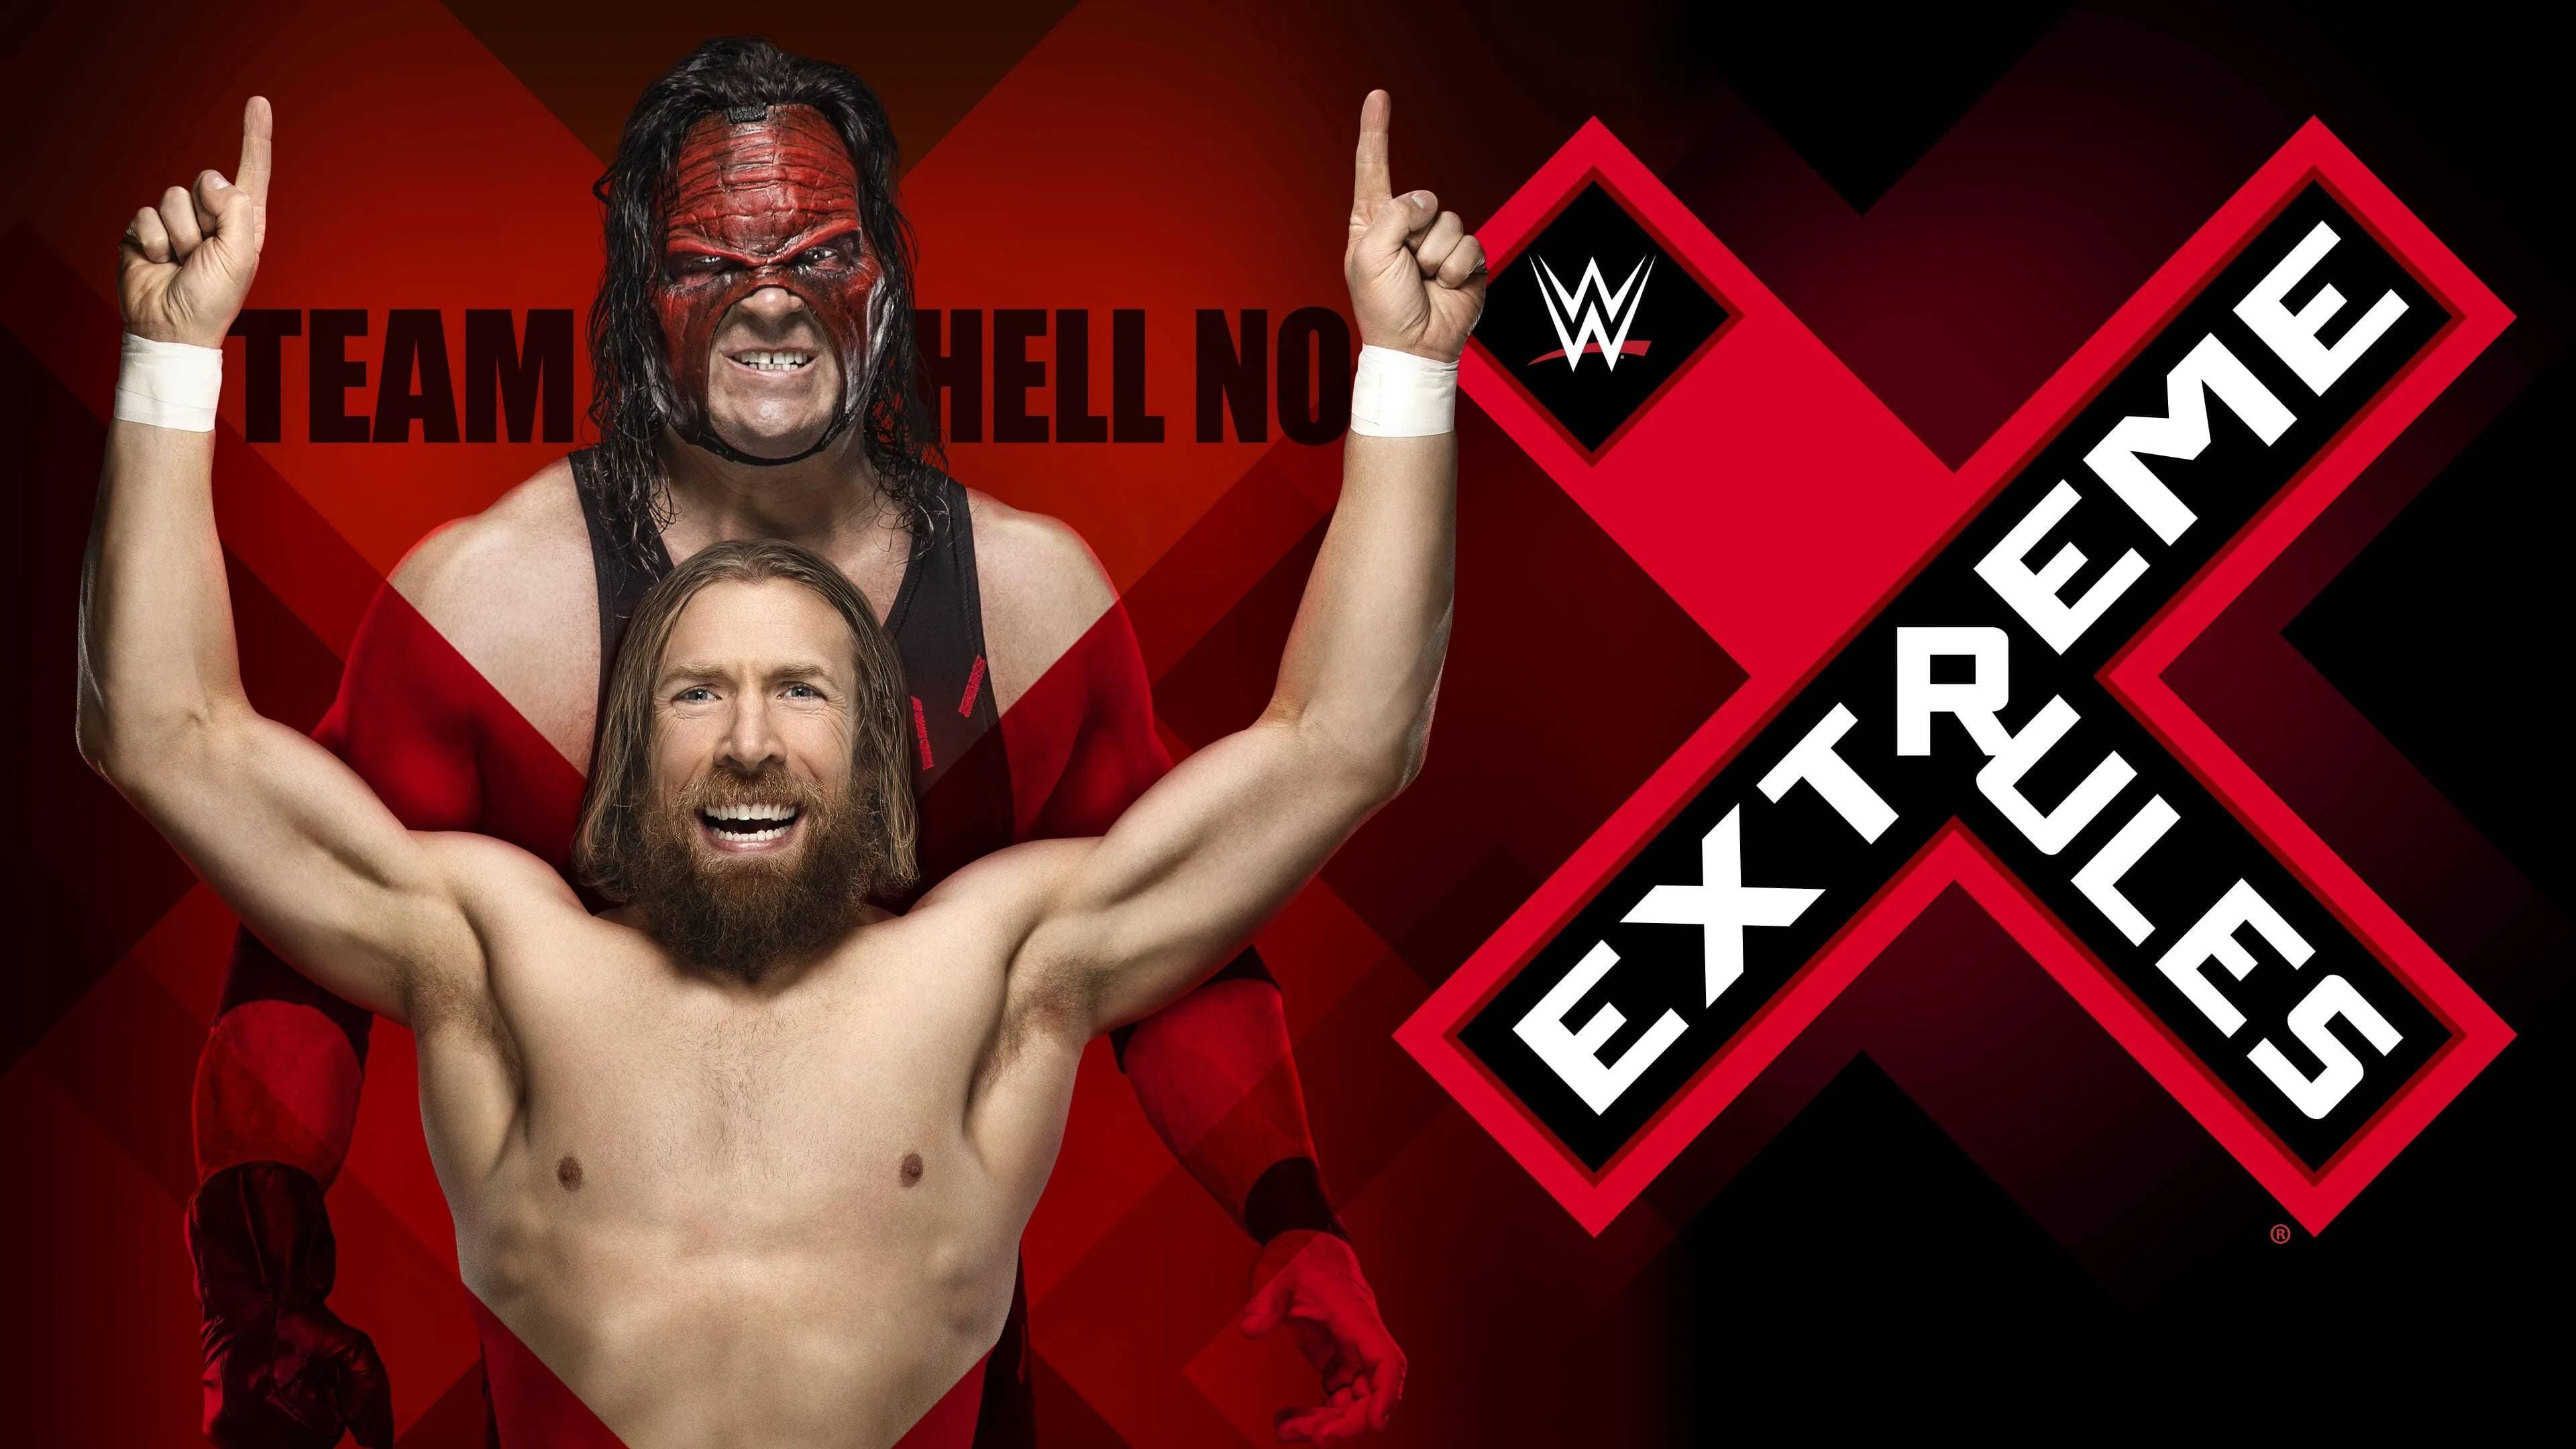 WWE Extreme Rules 2018 backdrop